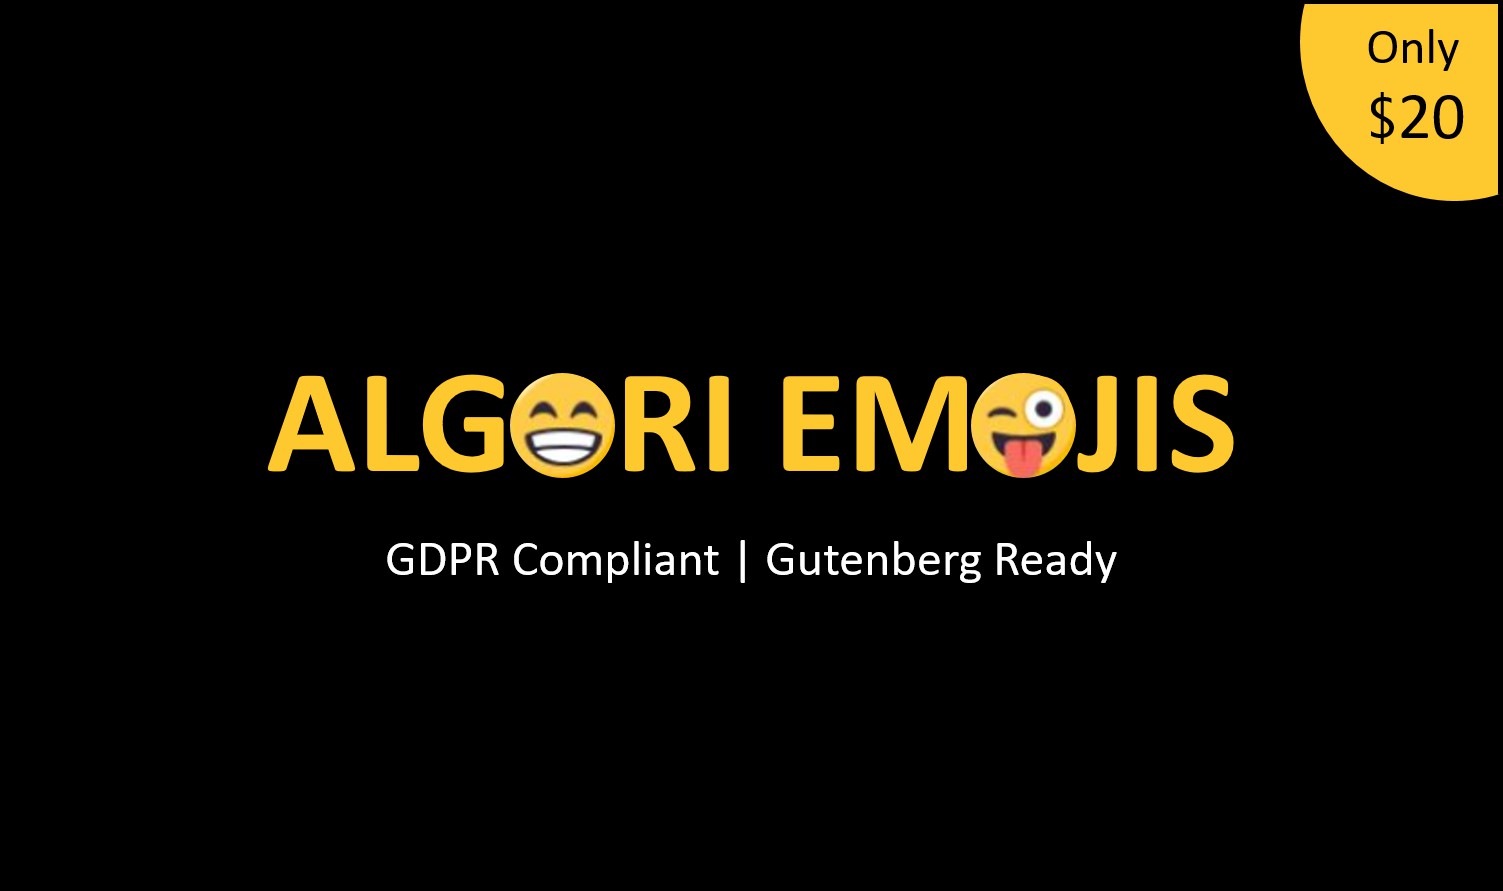 Algori Emojis for WordPress Gutenberg